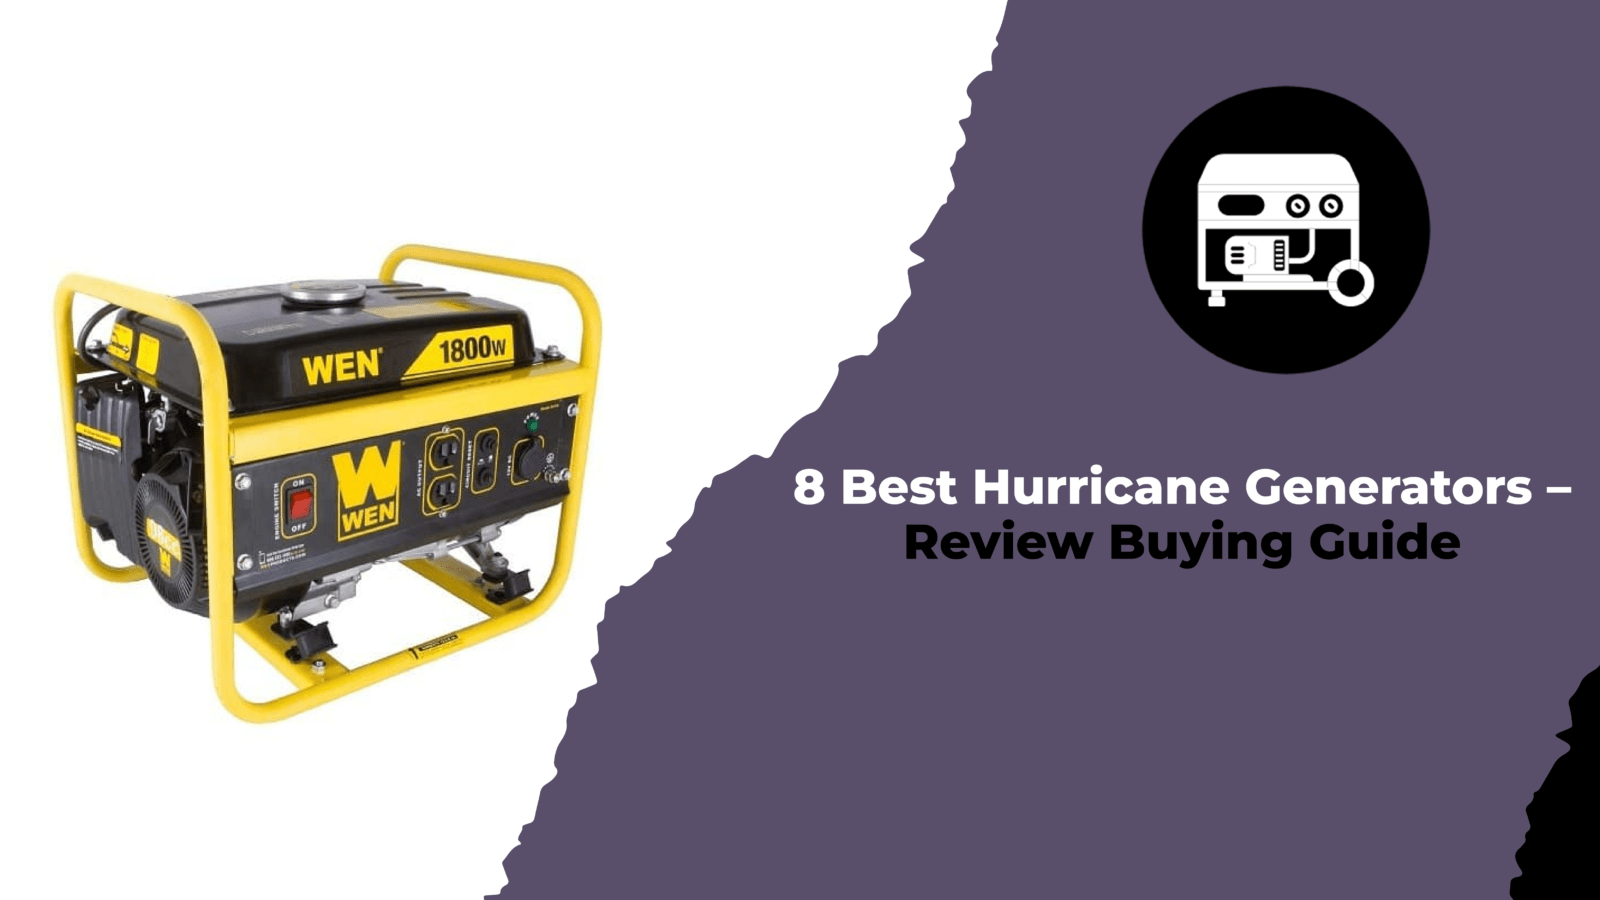 8 Best Hurricane Generators - Review Buying Guide